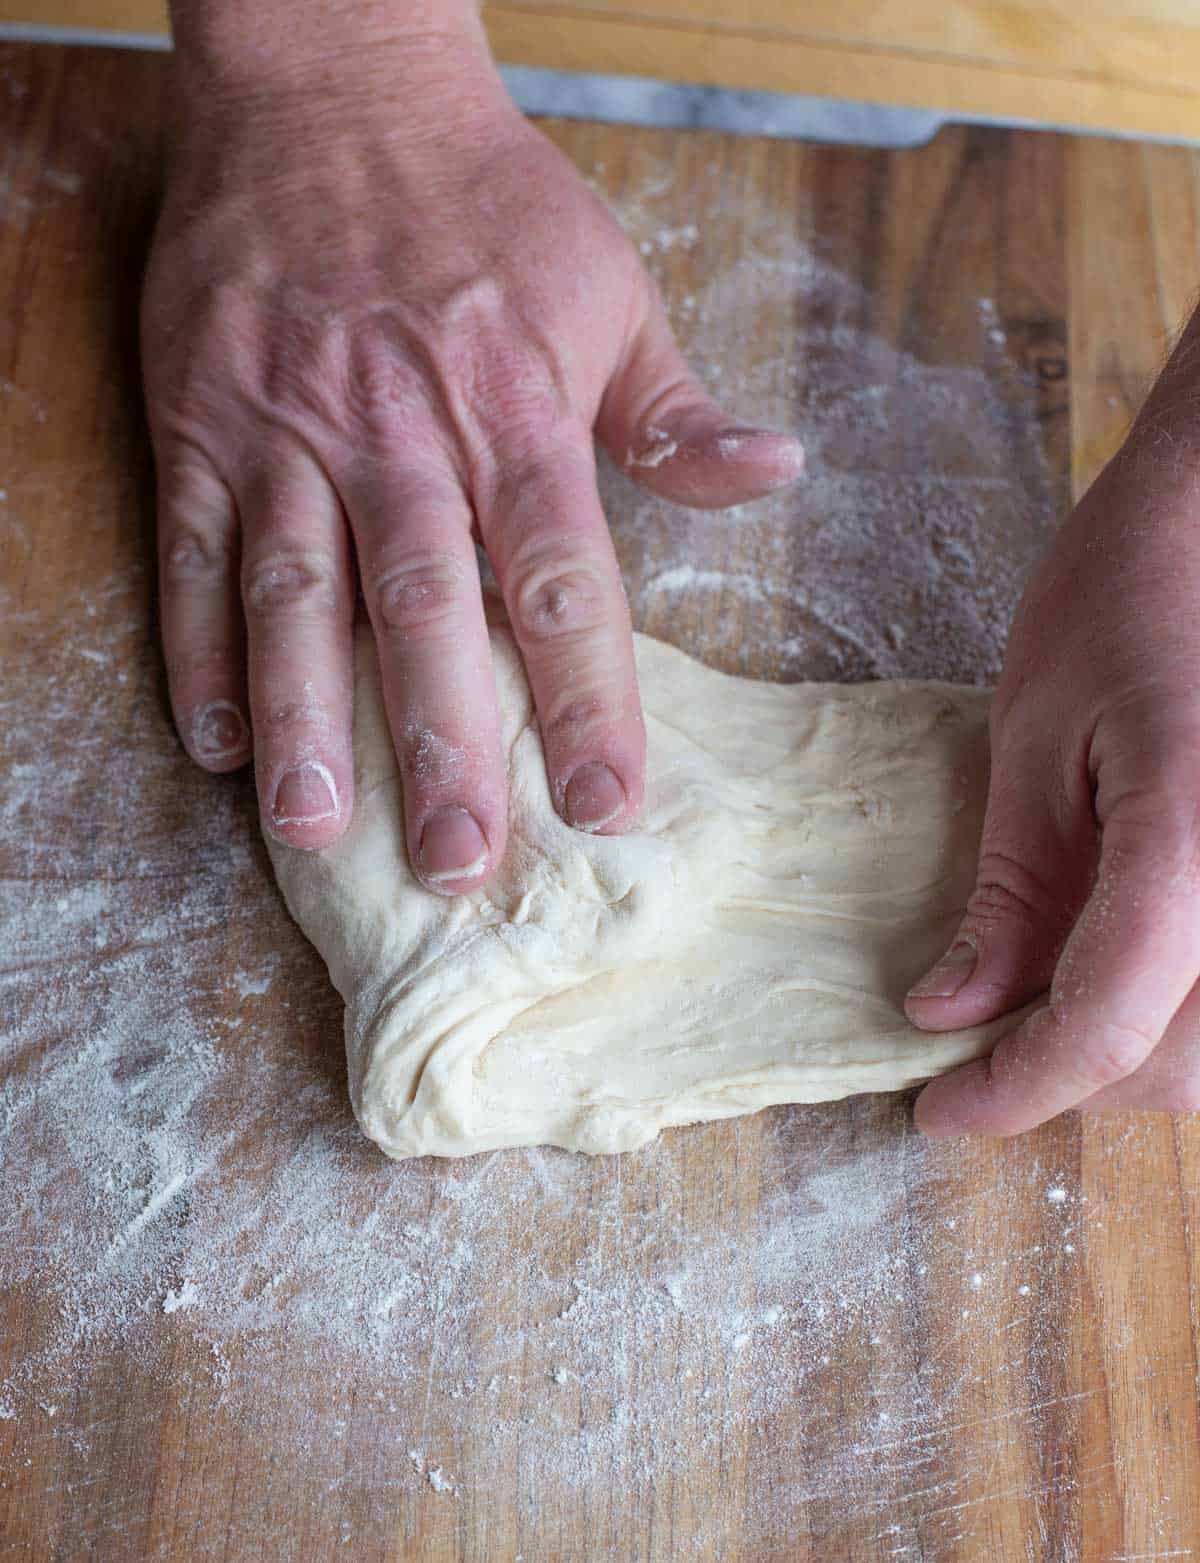 Preparing a single pizza dough